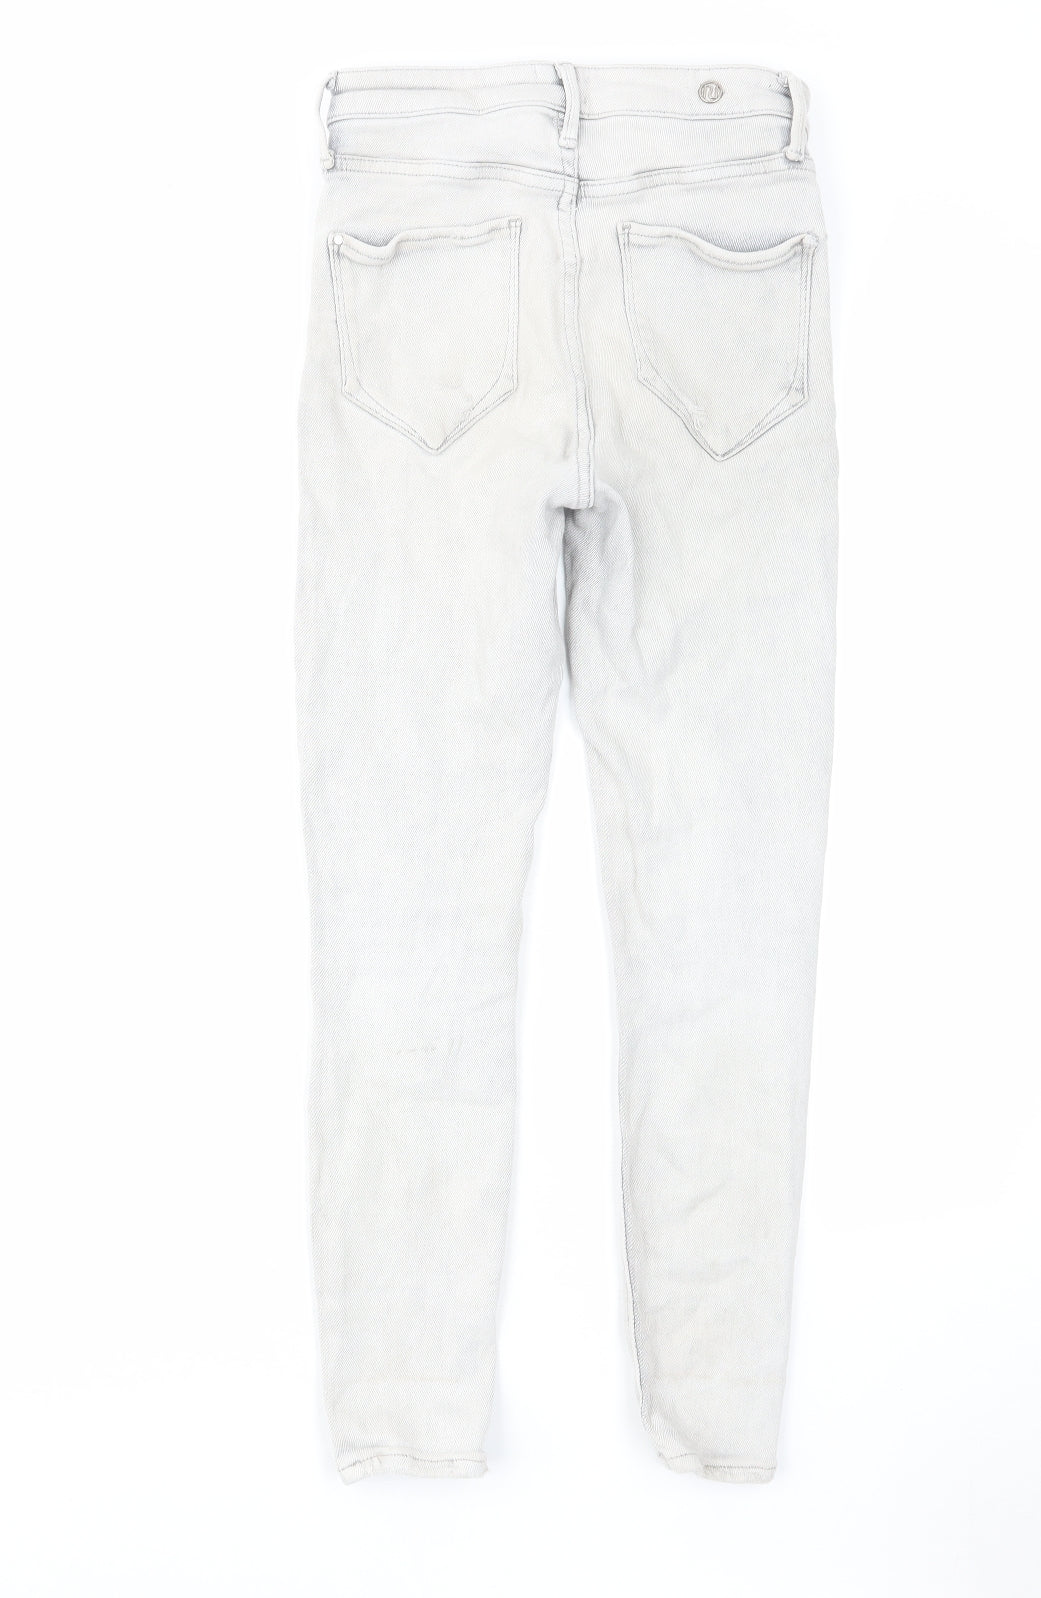 River Island Womens Grey Cotton Skinny Jeans Size 10 L25 in Regular Zip